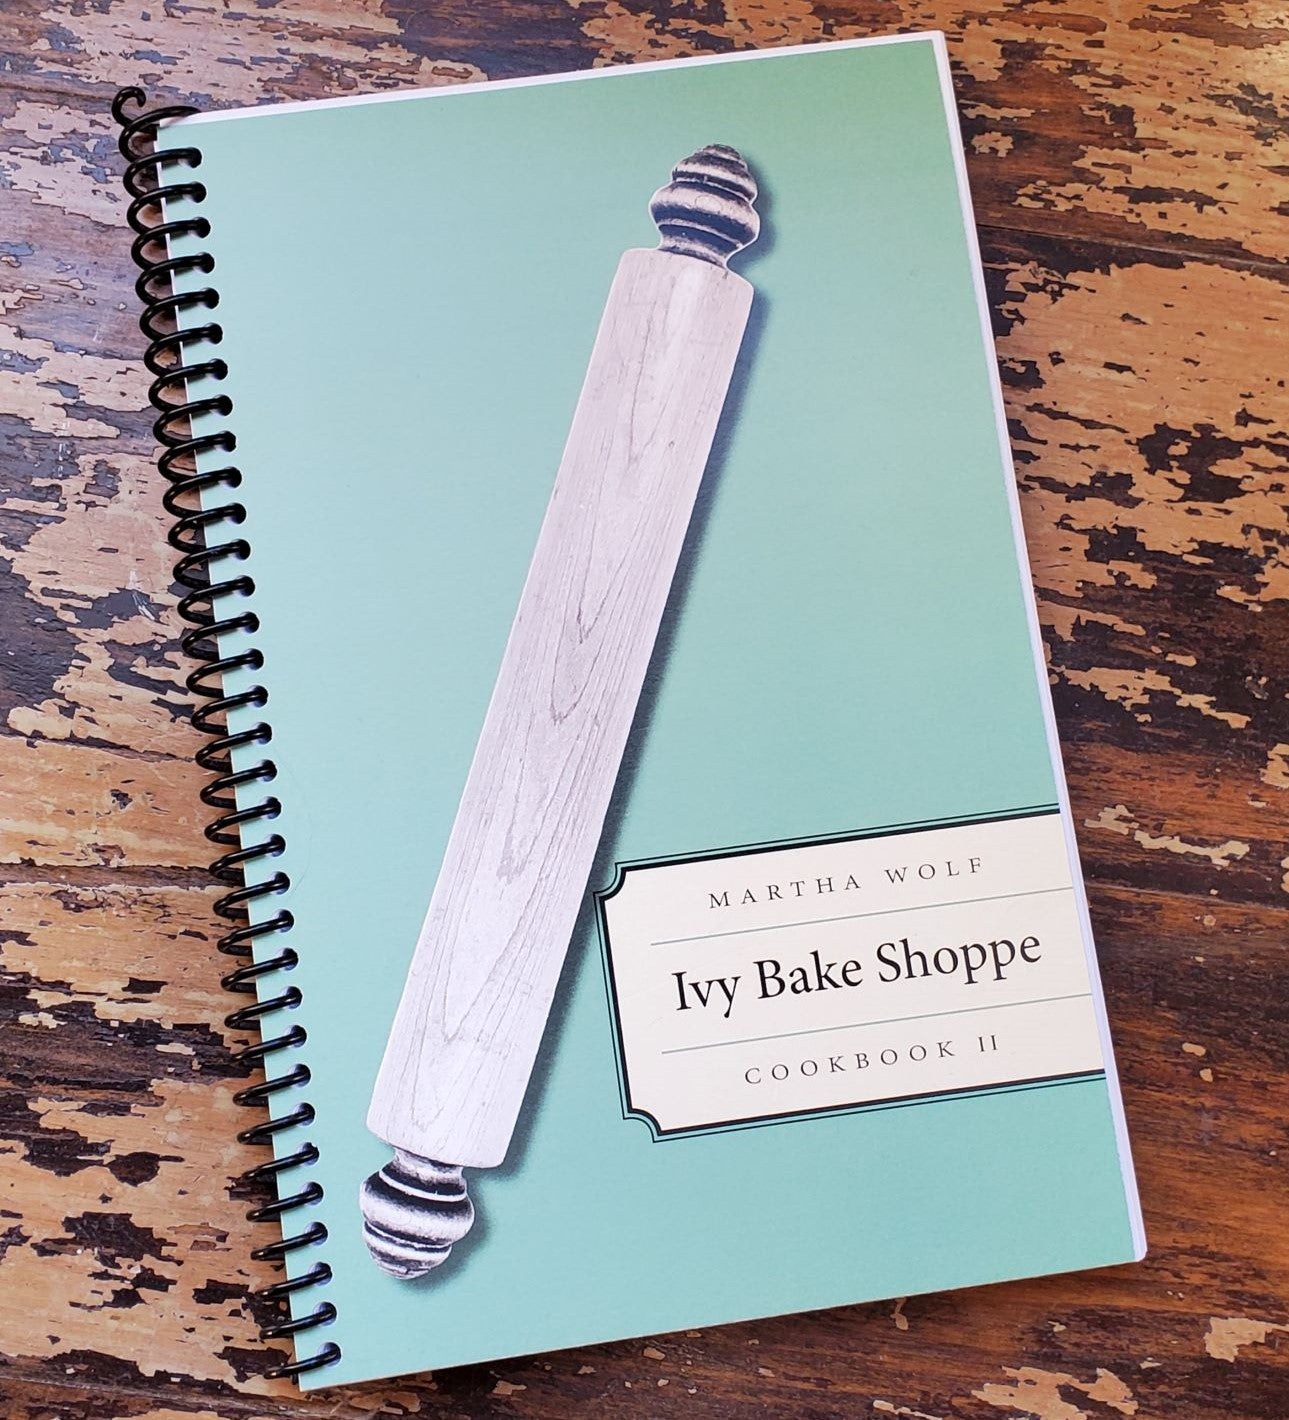 Ivy Bake Shoppe Cookbook 2